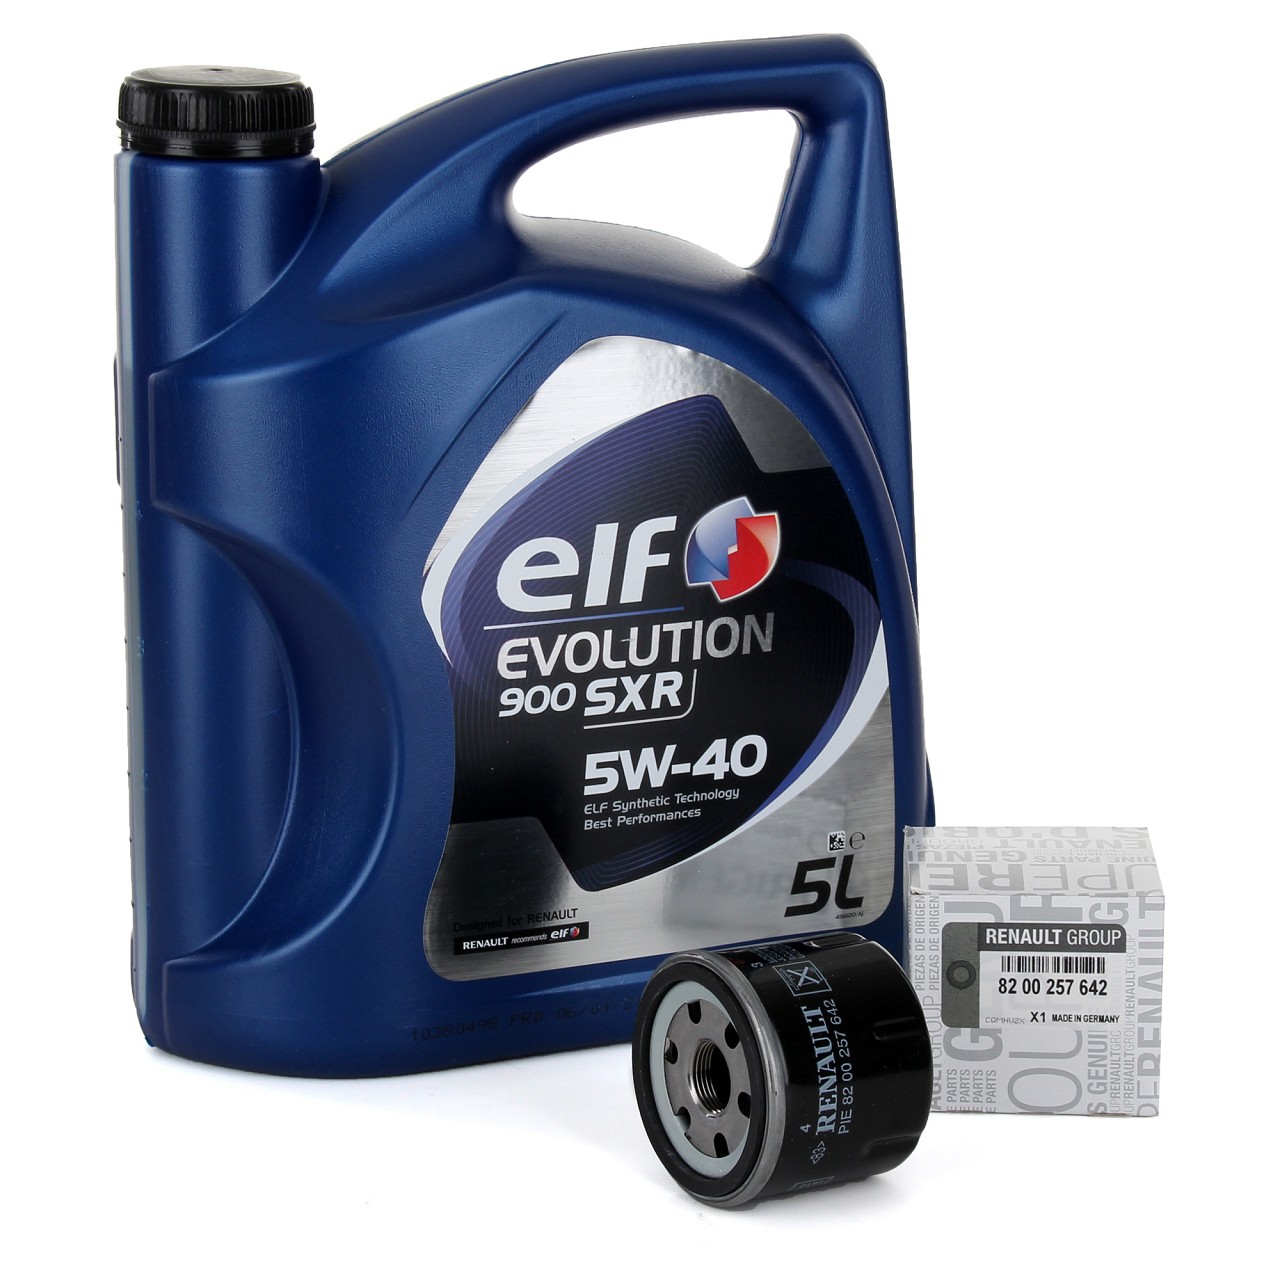 5L elf Evolution 900 SXR 5W-40 Motoröl + ORIGINAL Renault Ölfilter 8200257642